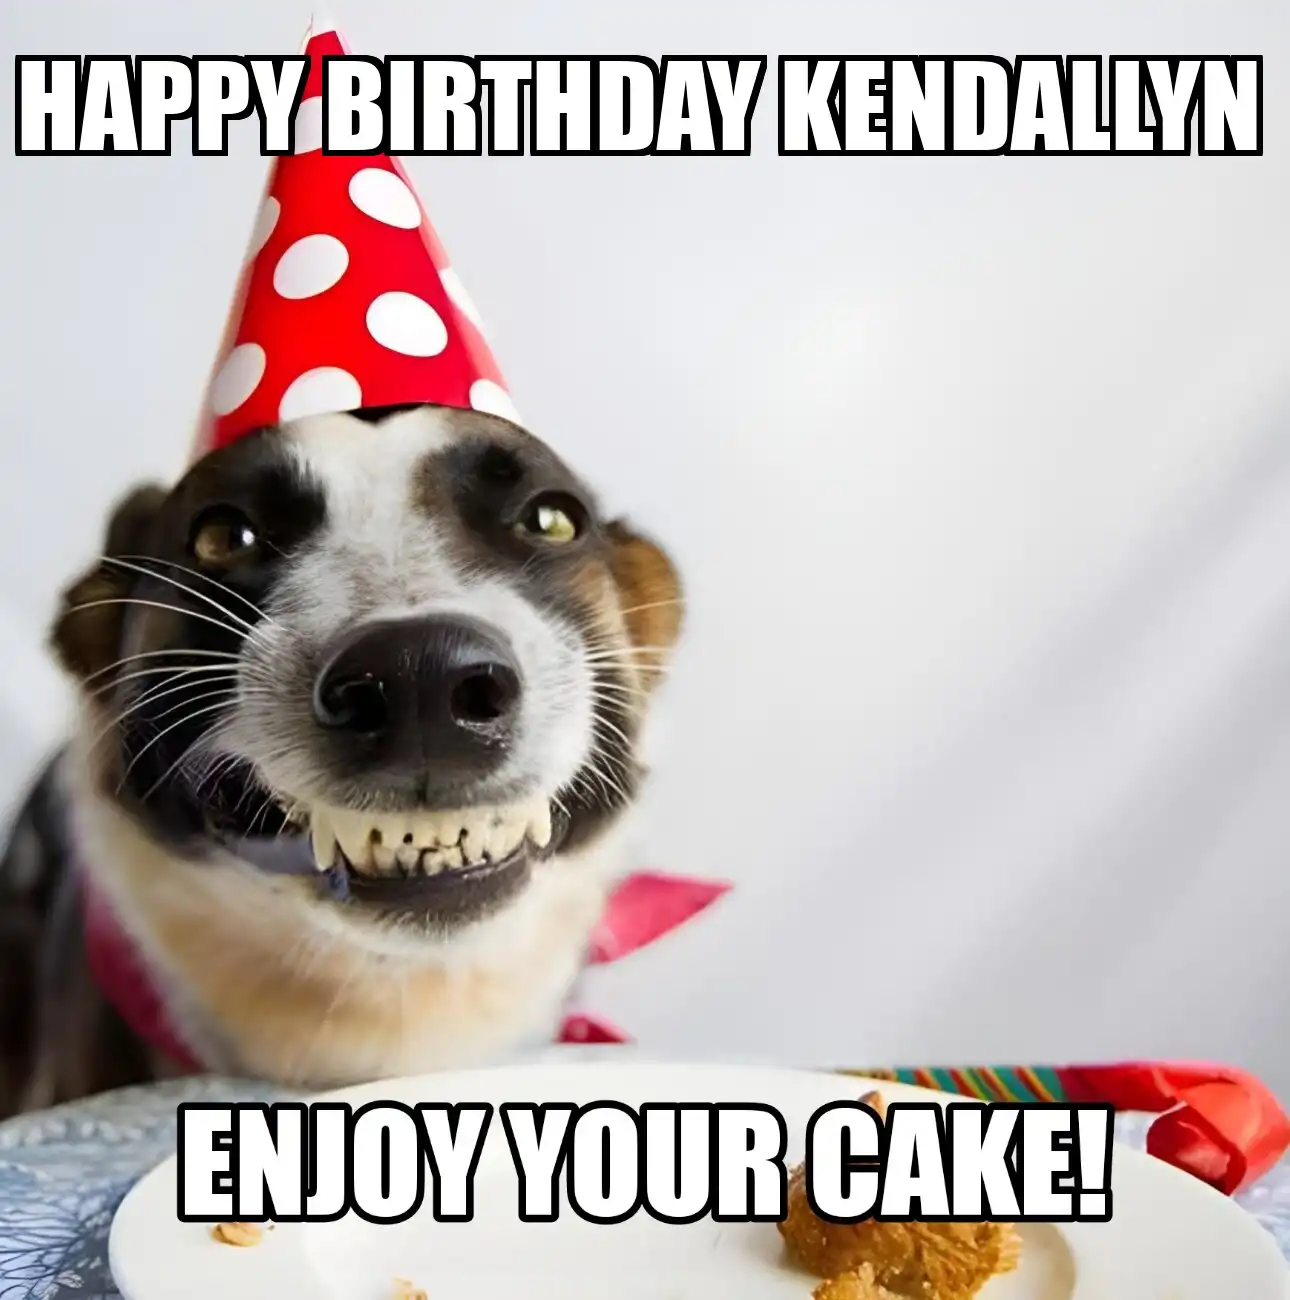 Happy Birthday Kendallyn Enjoy Your Cake Dog Meme